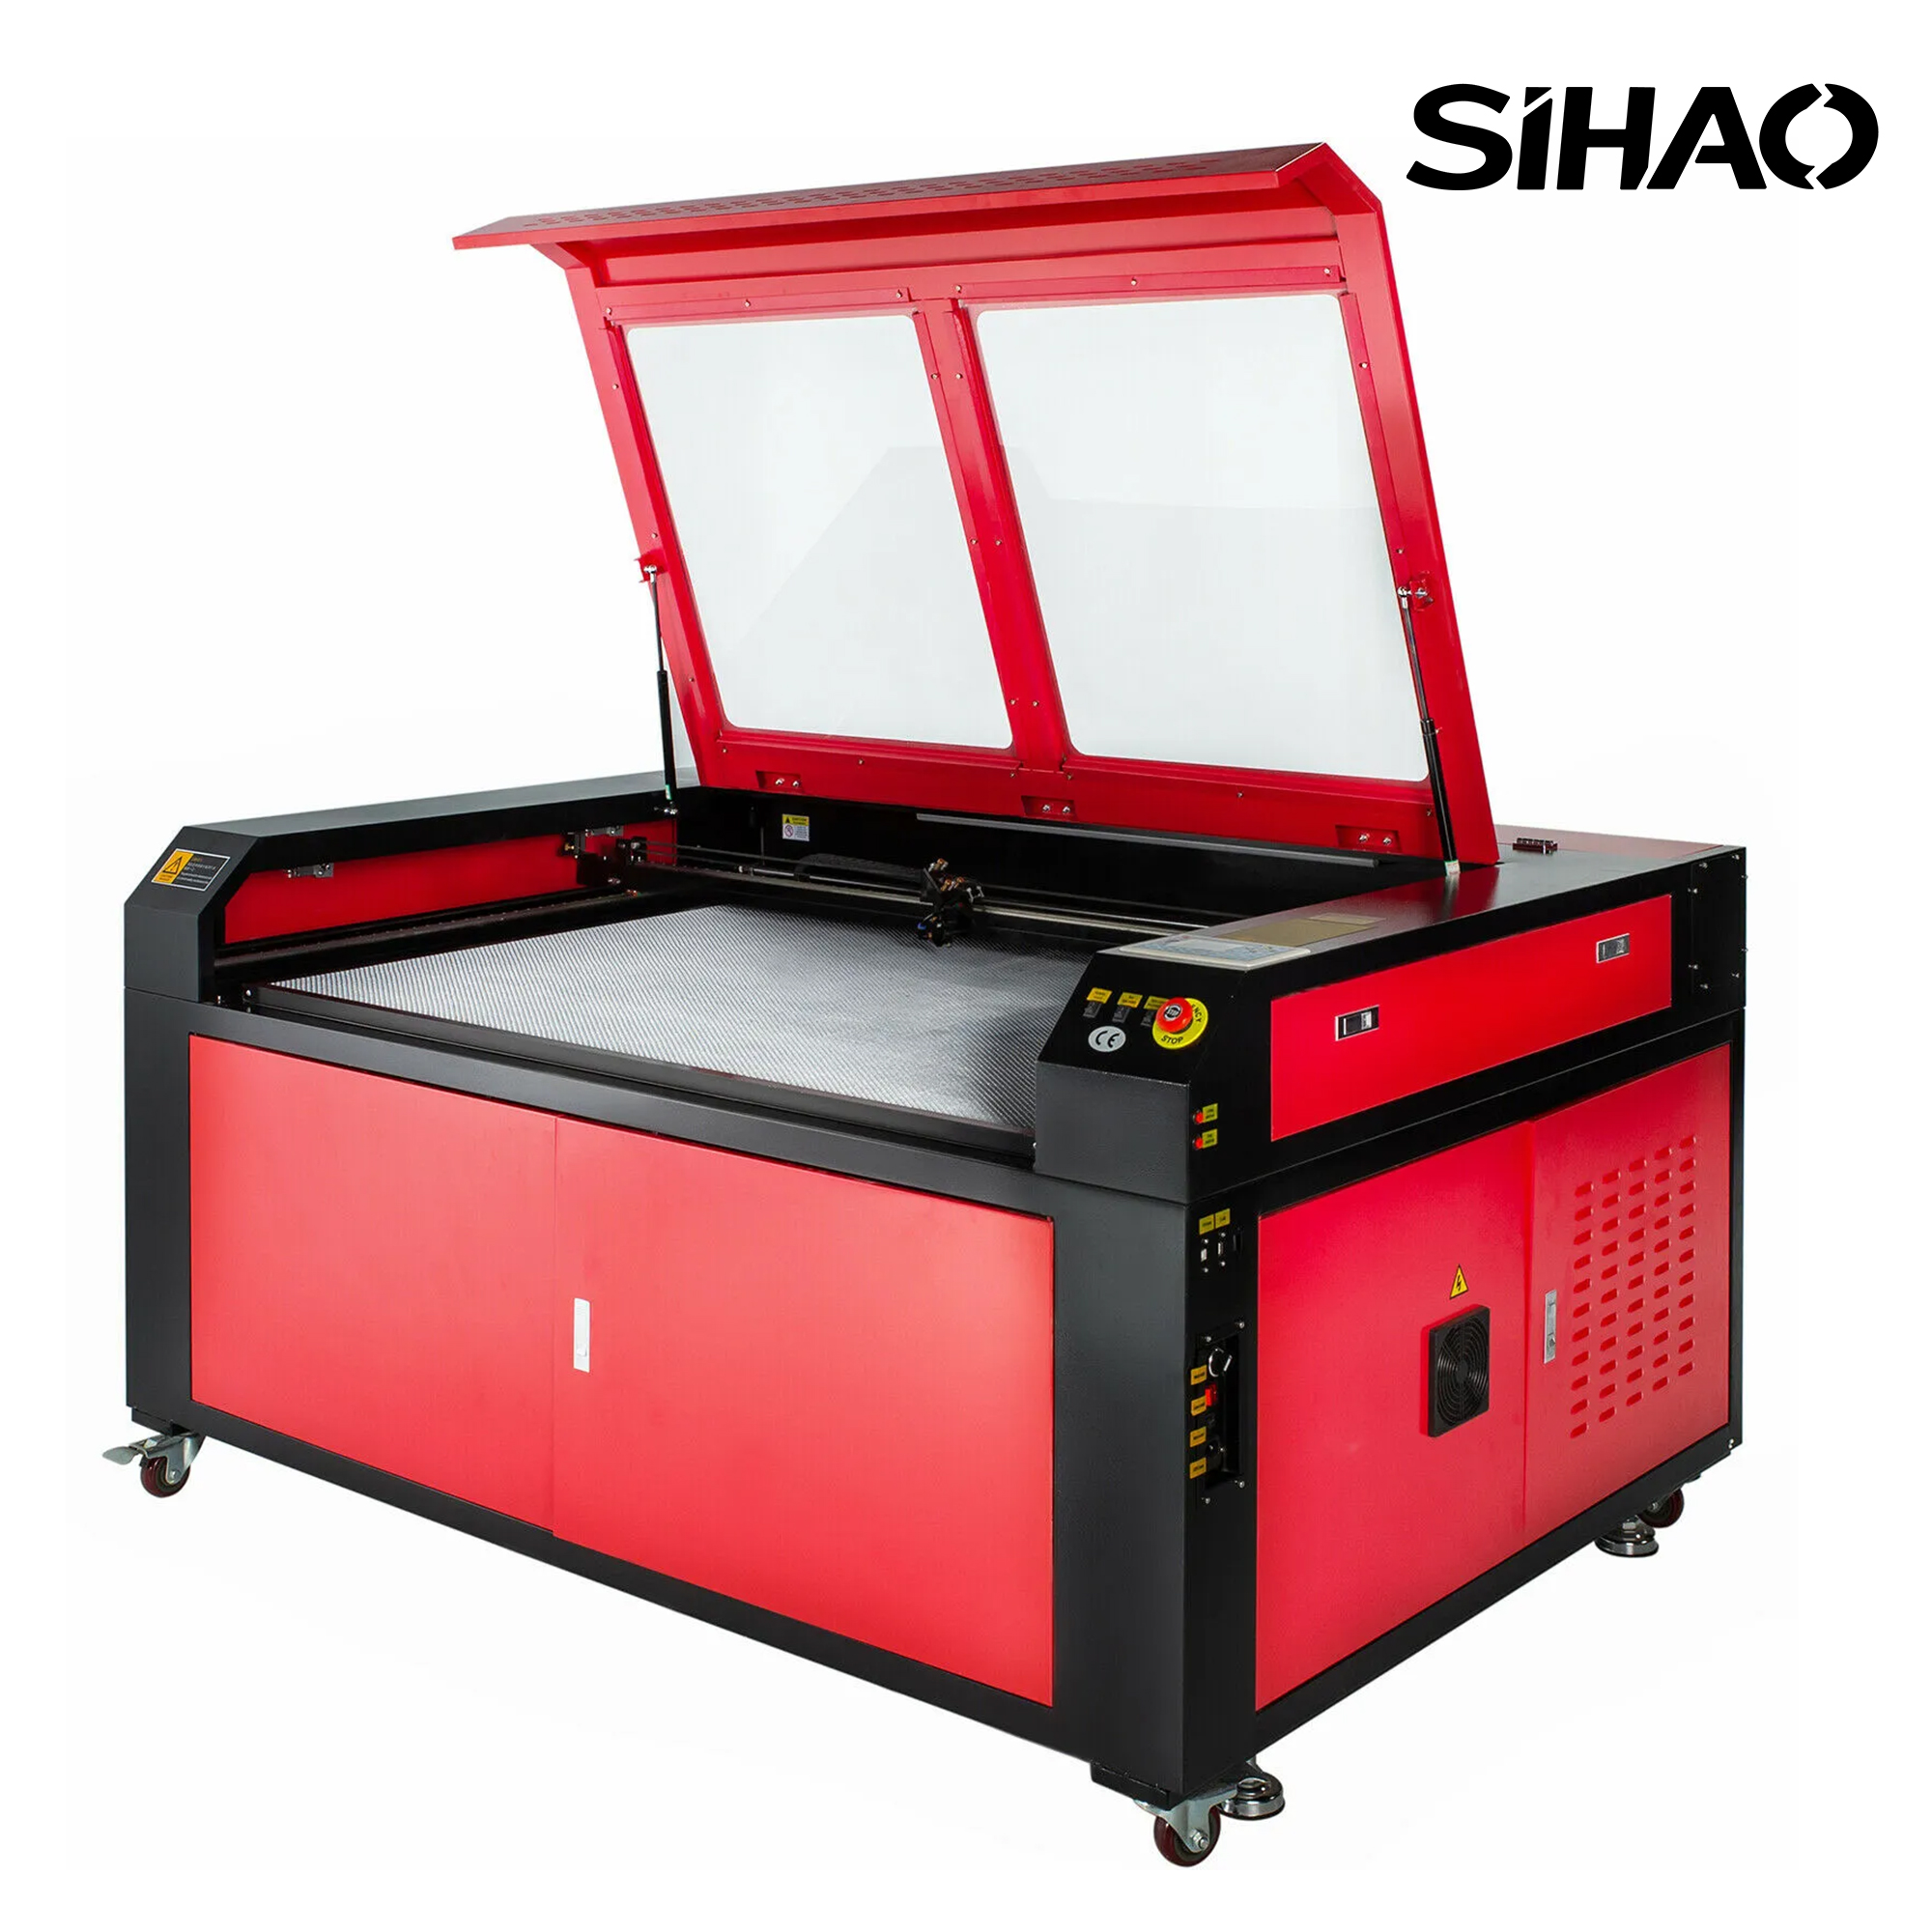 SIHAO 1400X900MM 130W Laser Engraving Machine